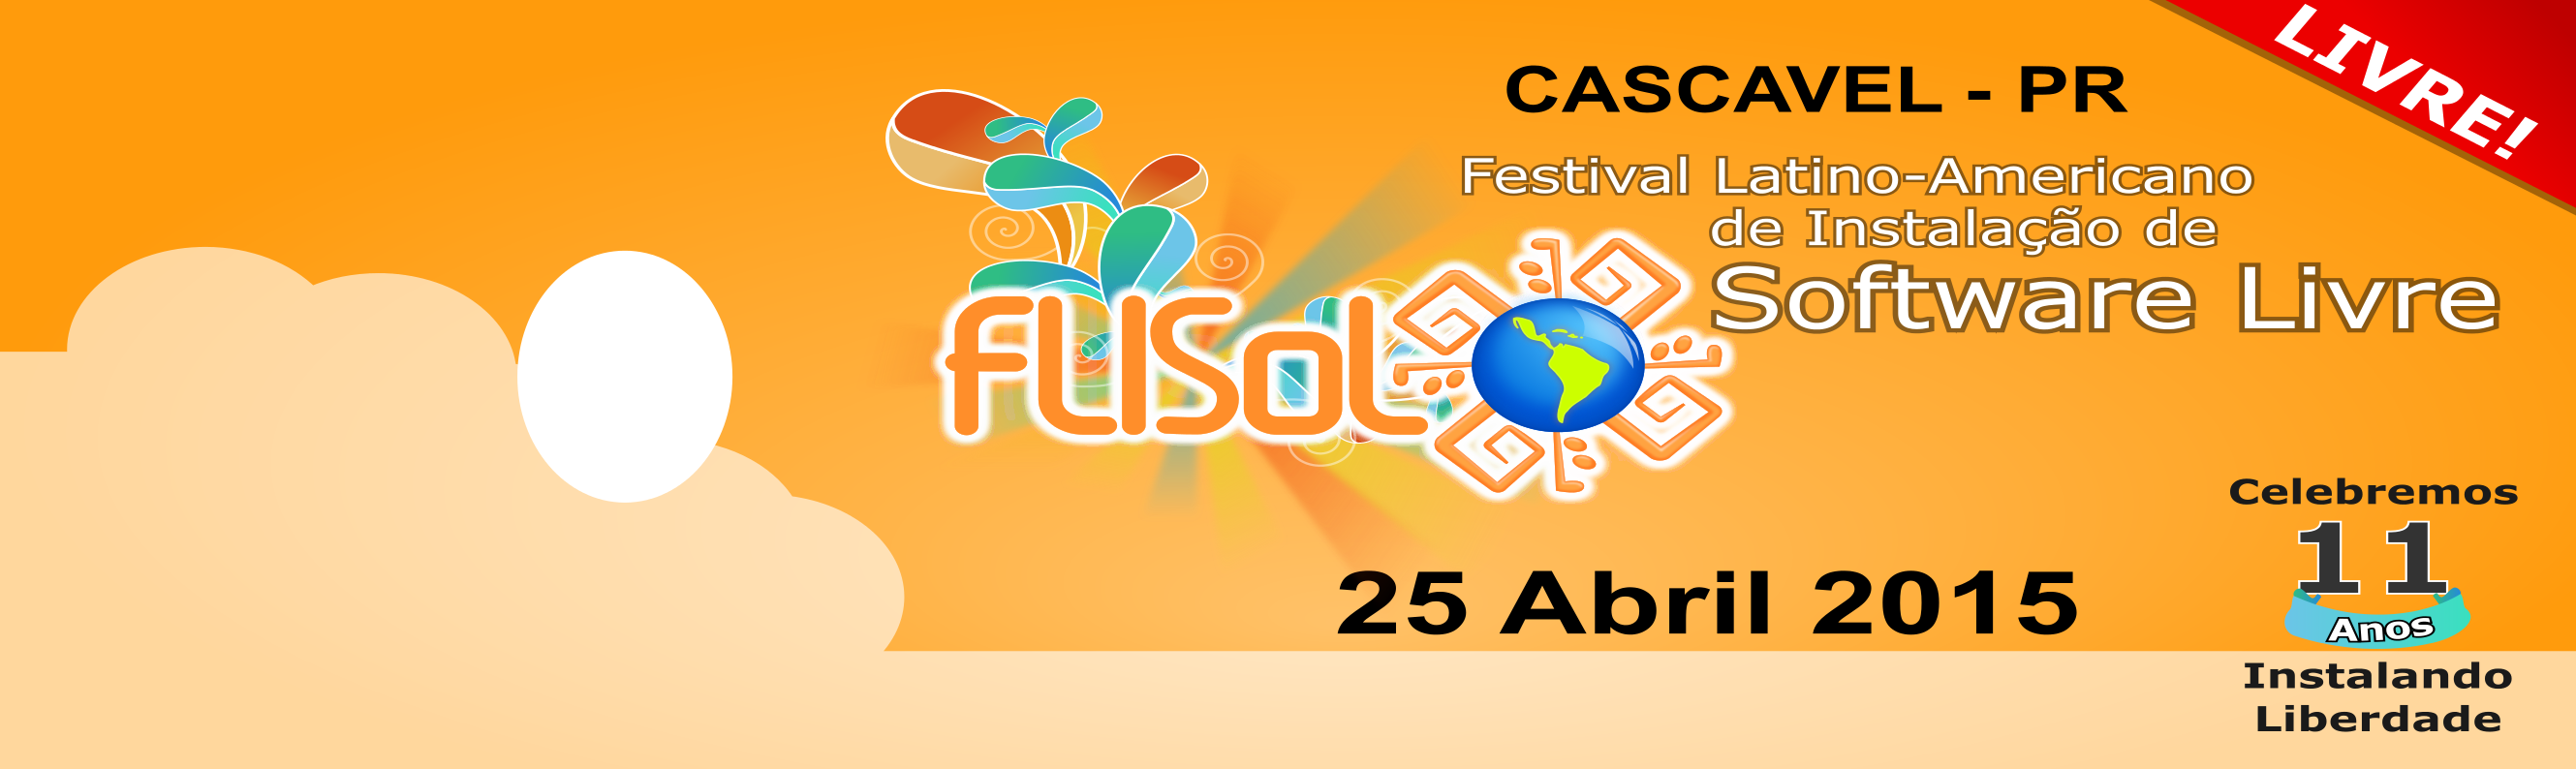 Flisol 2015   Cascavel